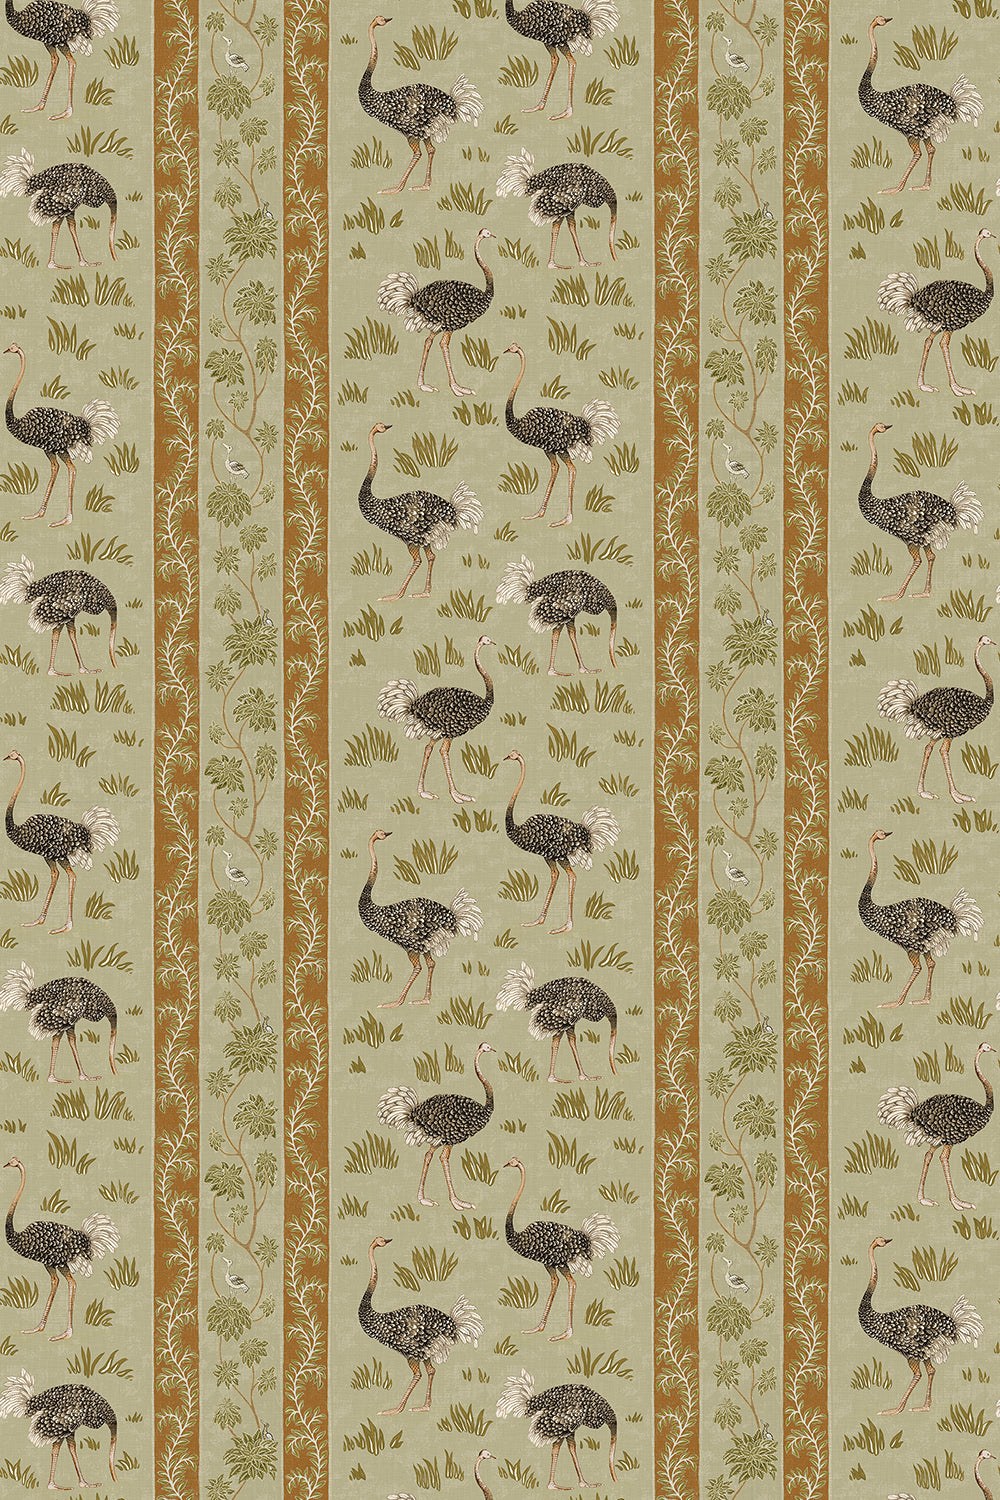 josephine-munsey-wallpaper-khaki-and-green-birds-in-grass-cross-hatched-texture-stripe-background-Ostrich-stripe